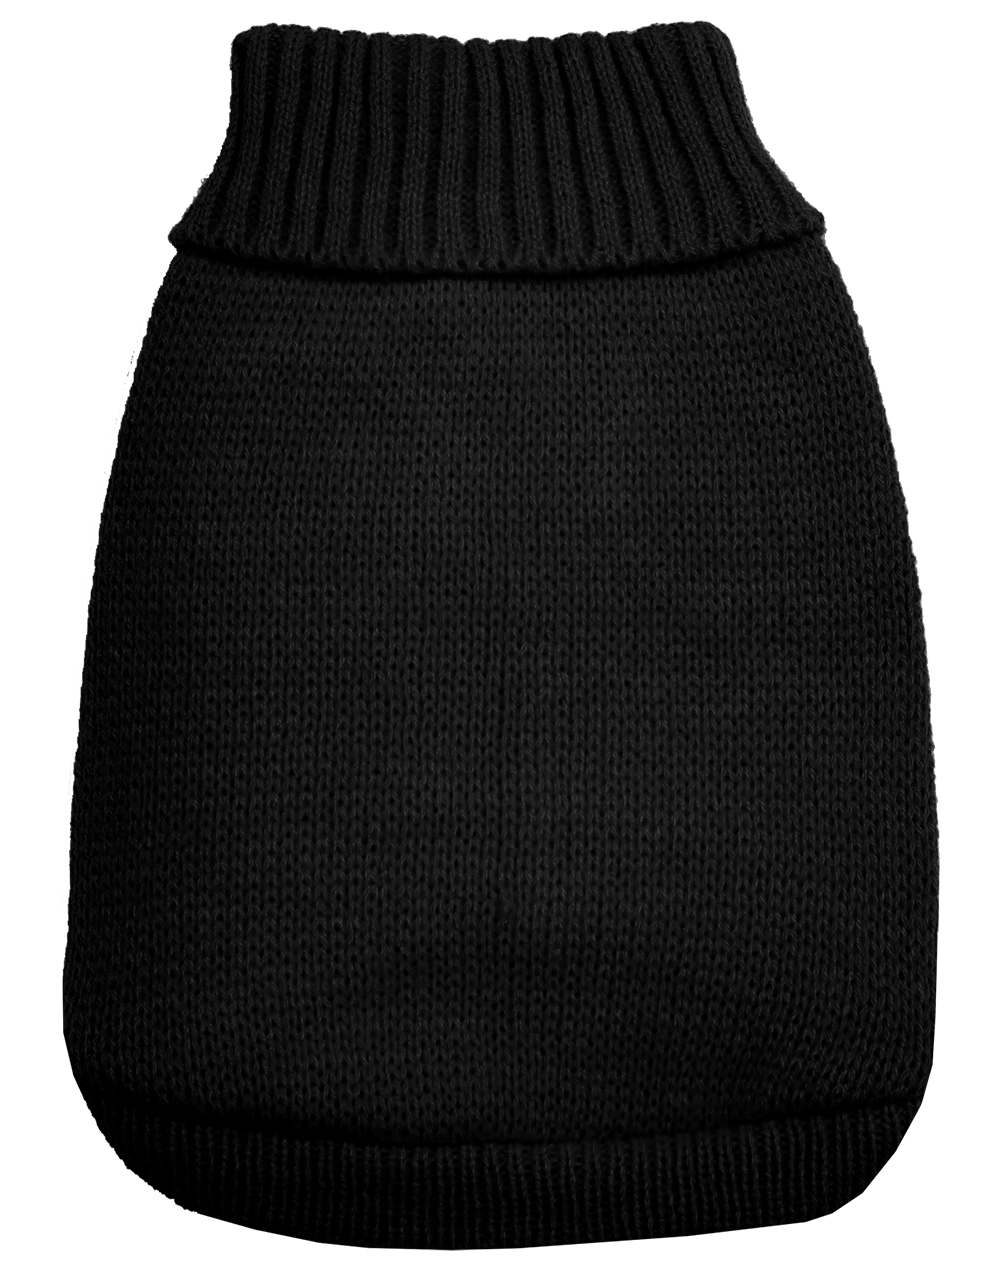 Knit Pet Sweater Black Size Large